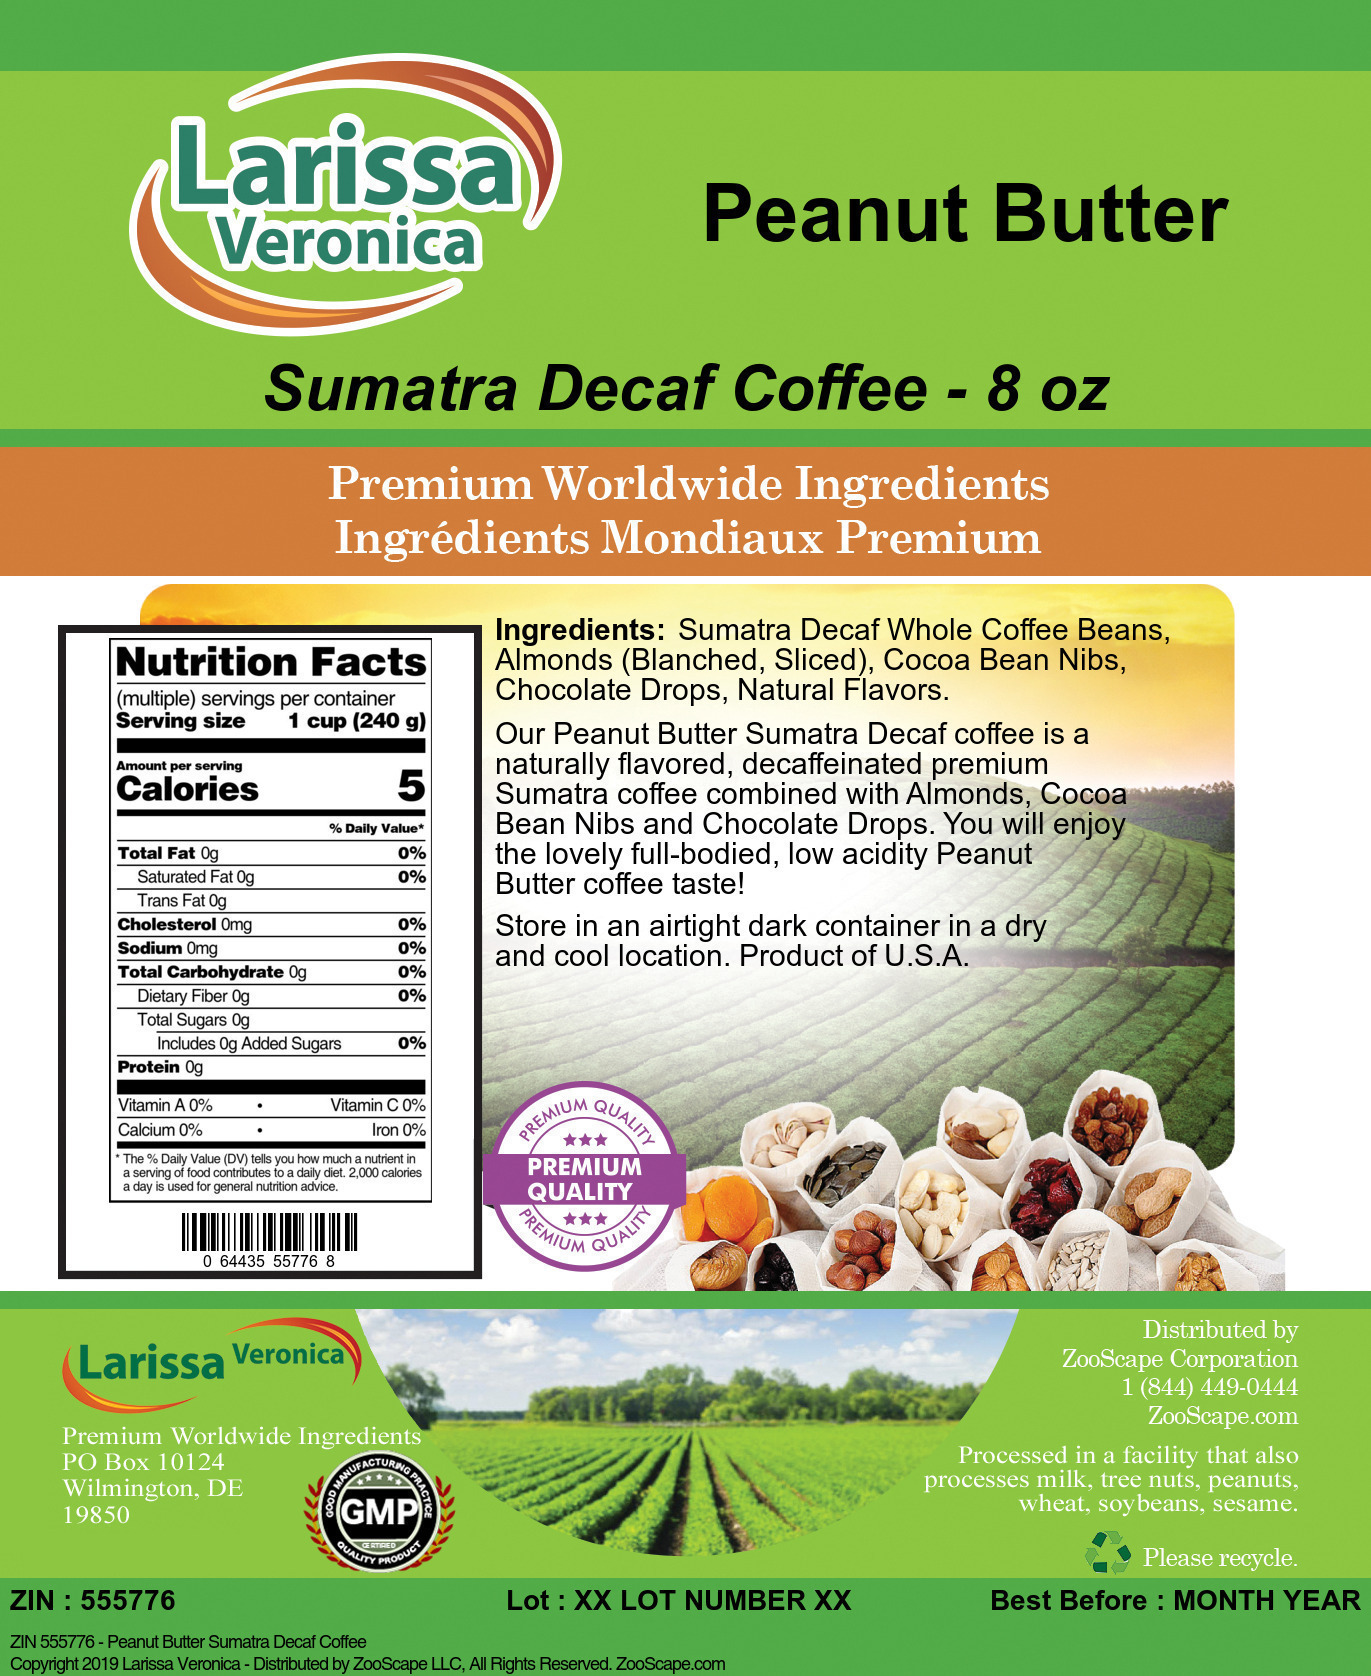 Peanut Butter Sumatra Decaf Coffee - Label